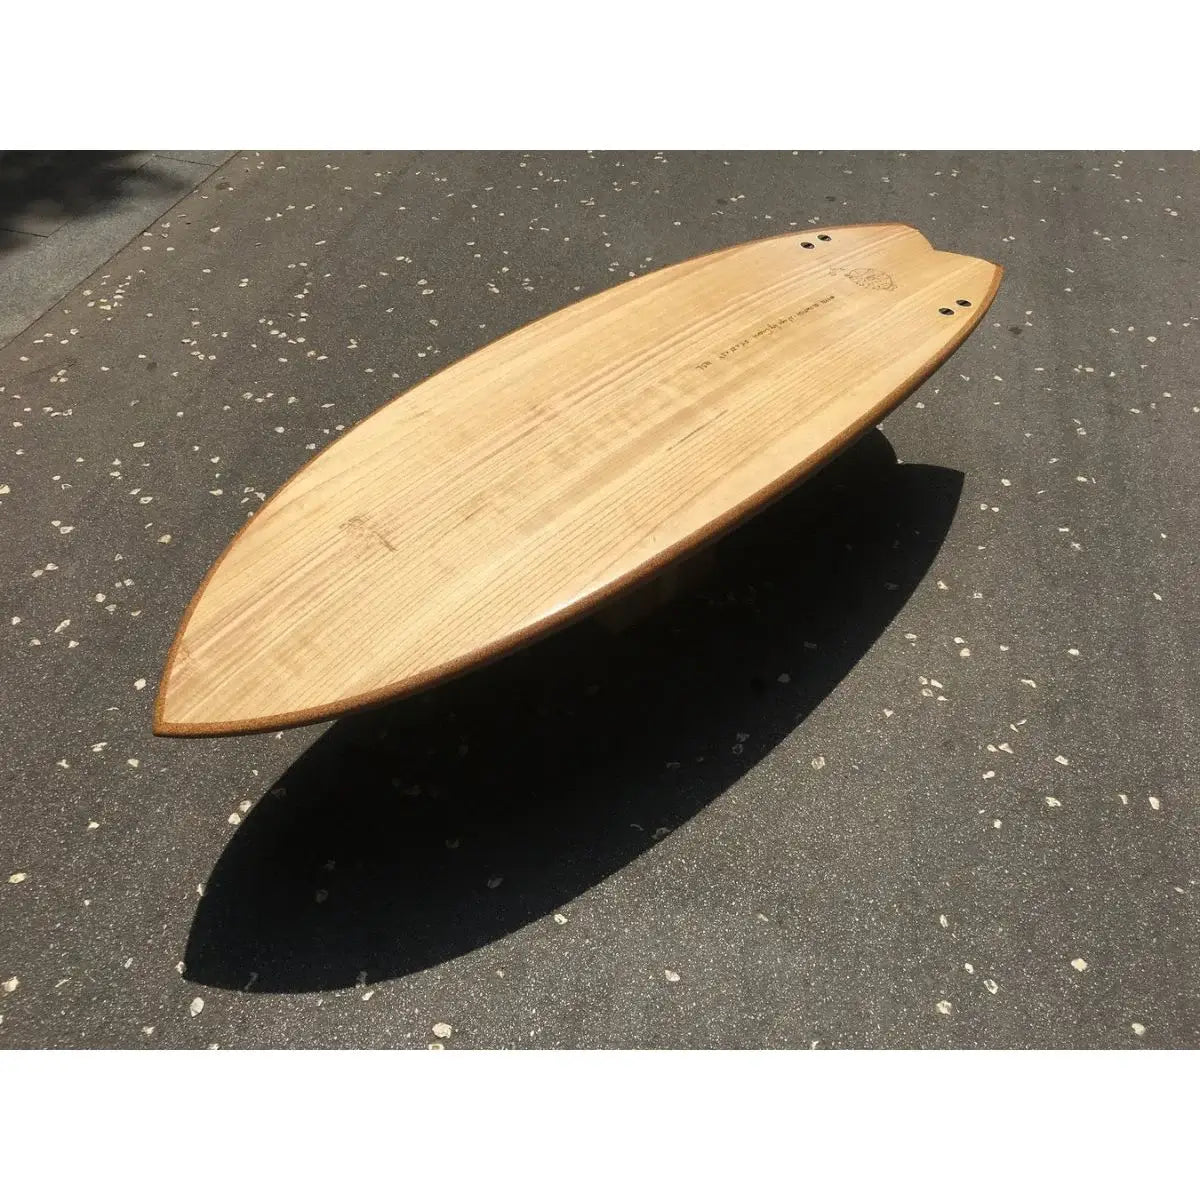 BLOWFISH — TRUWOOD SURFBOARDS